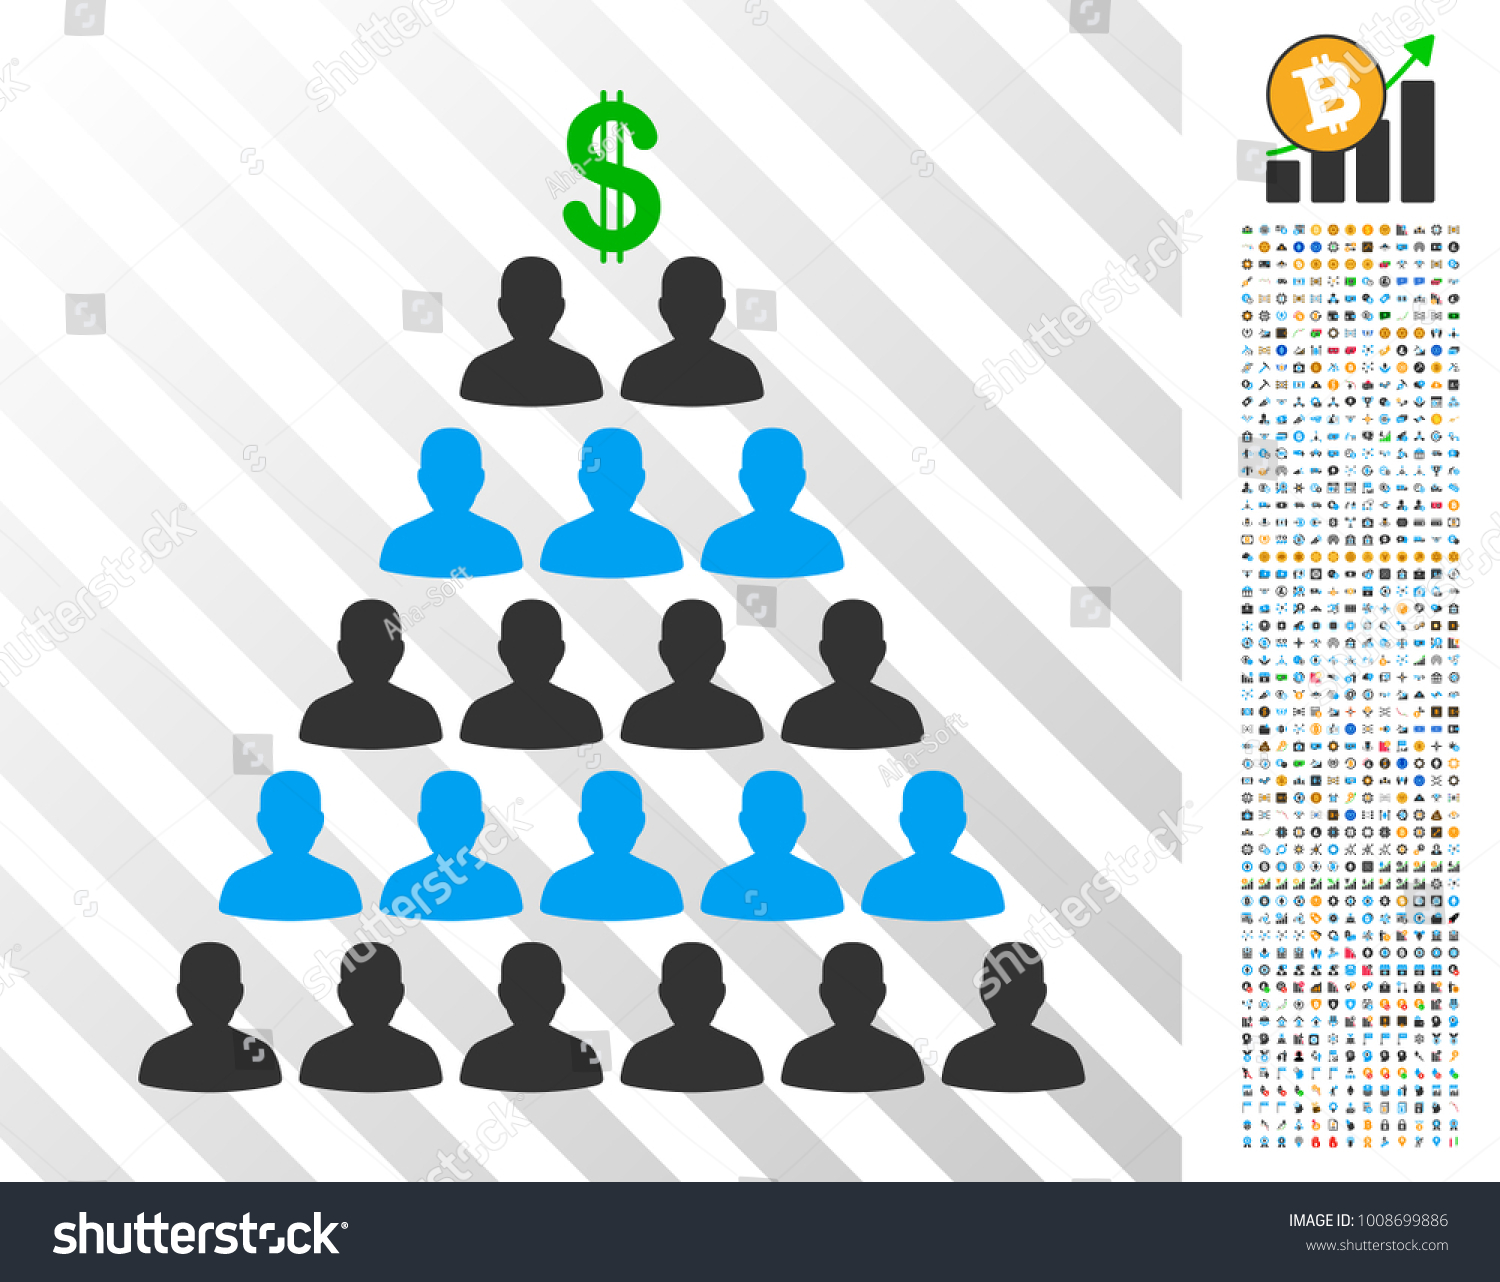 Bitcoin mining pyramid scheme when to take profit cryptocurrency